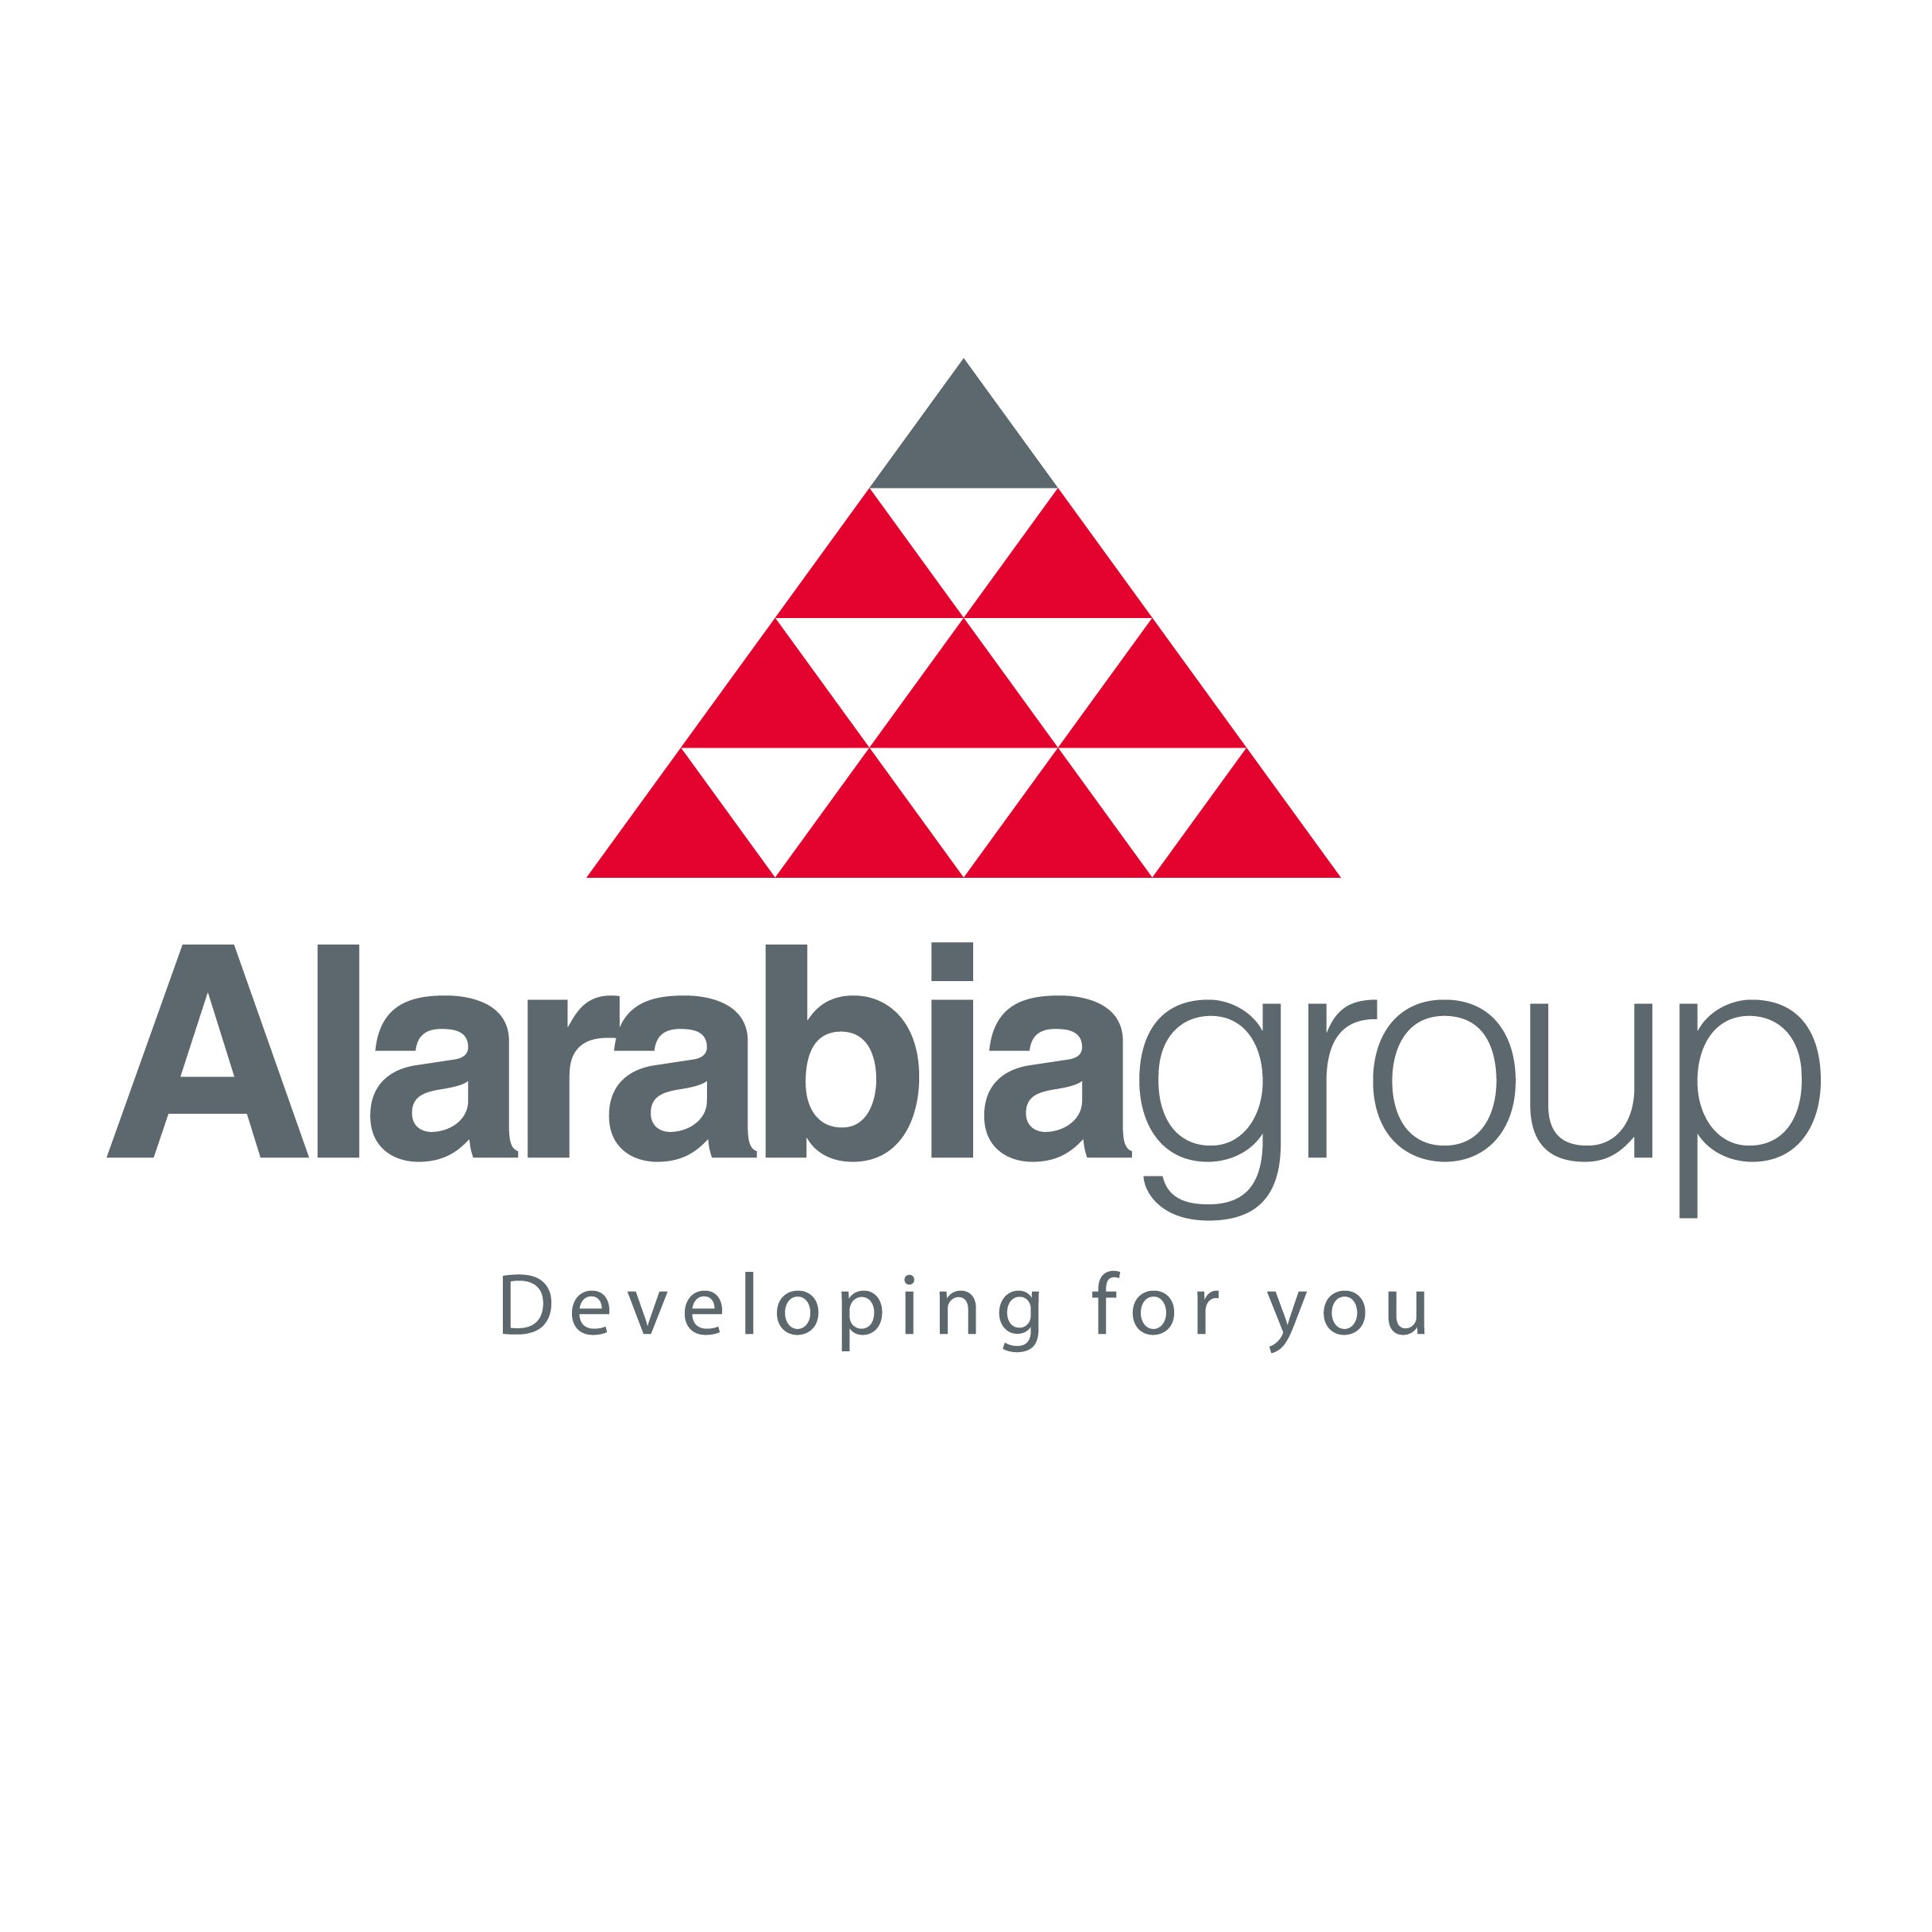 Alarabia group